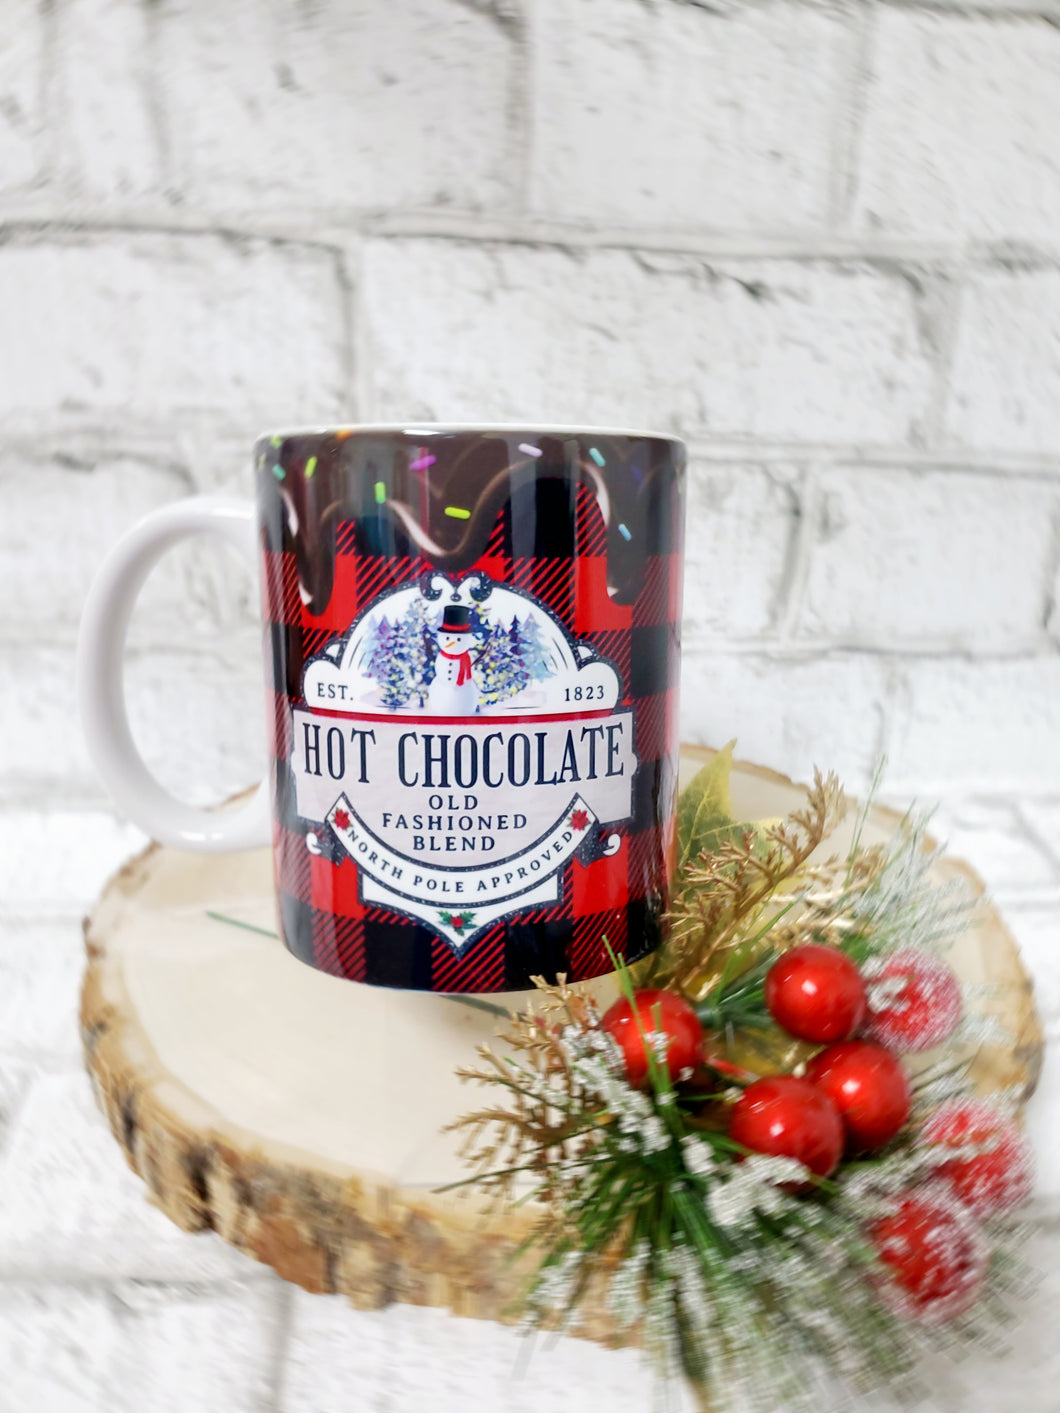 Hot Chocolate express mug